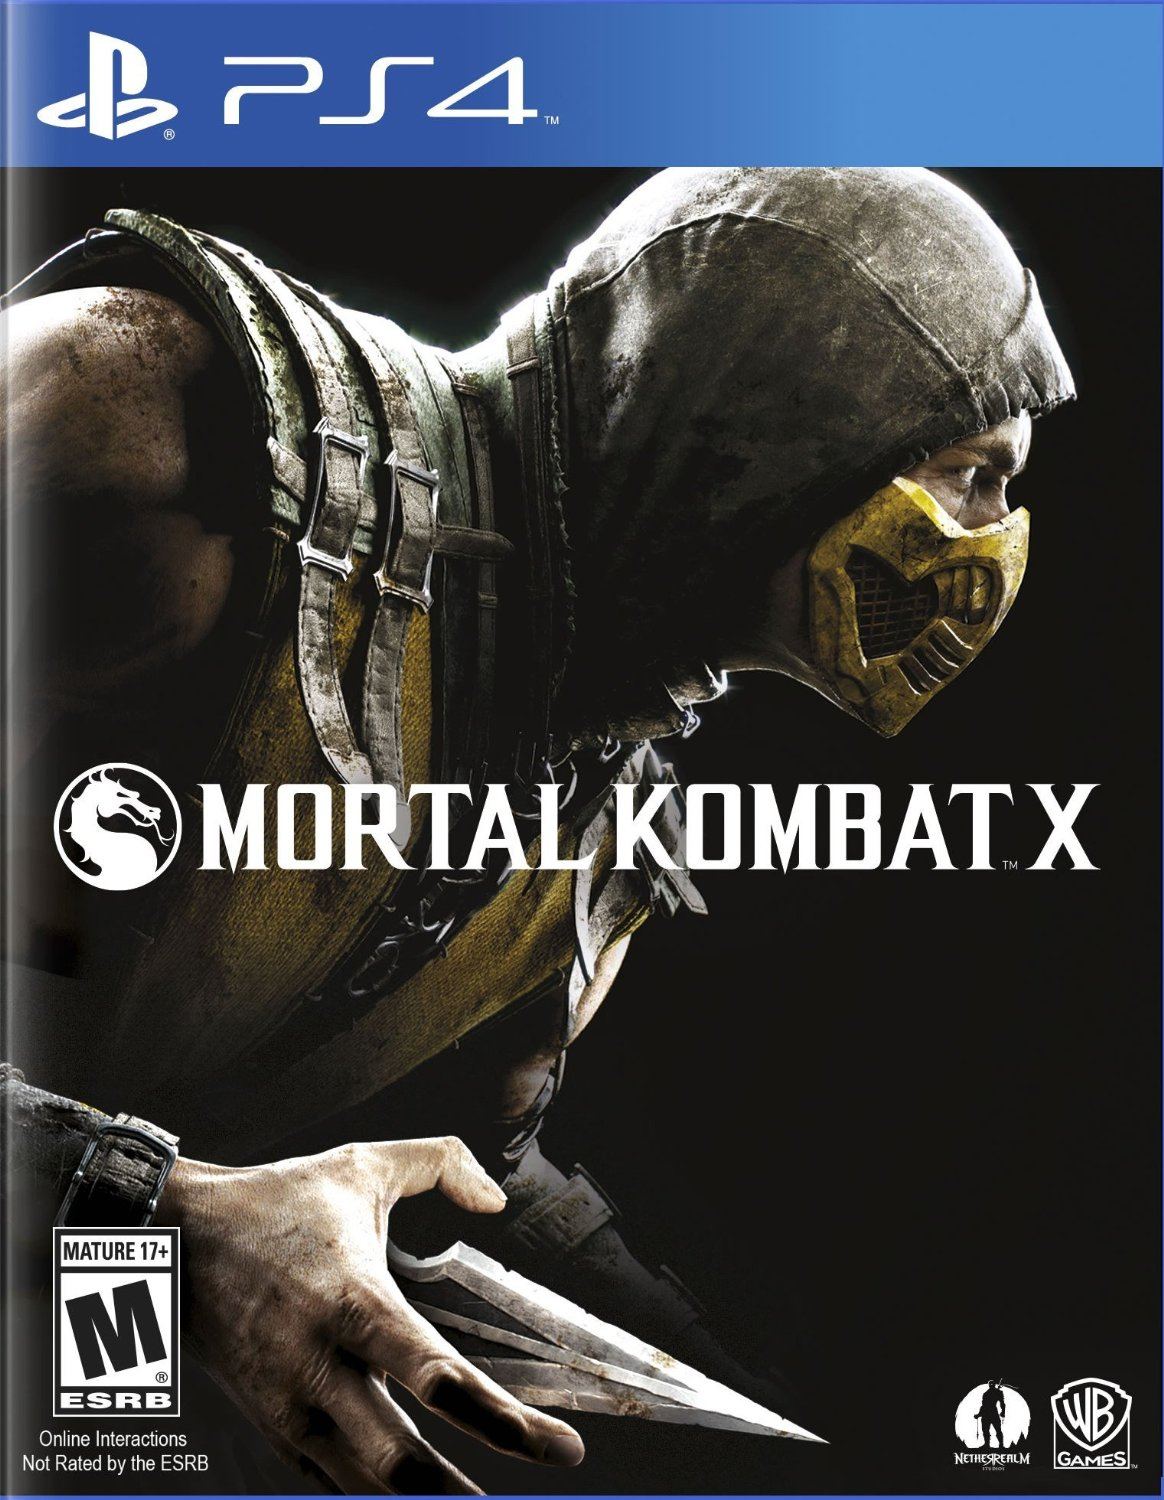 Mortal Kombat X - How to Play Sub-Zero: Combos and Strategies